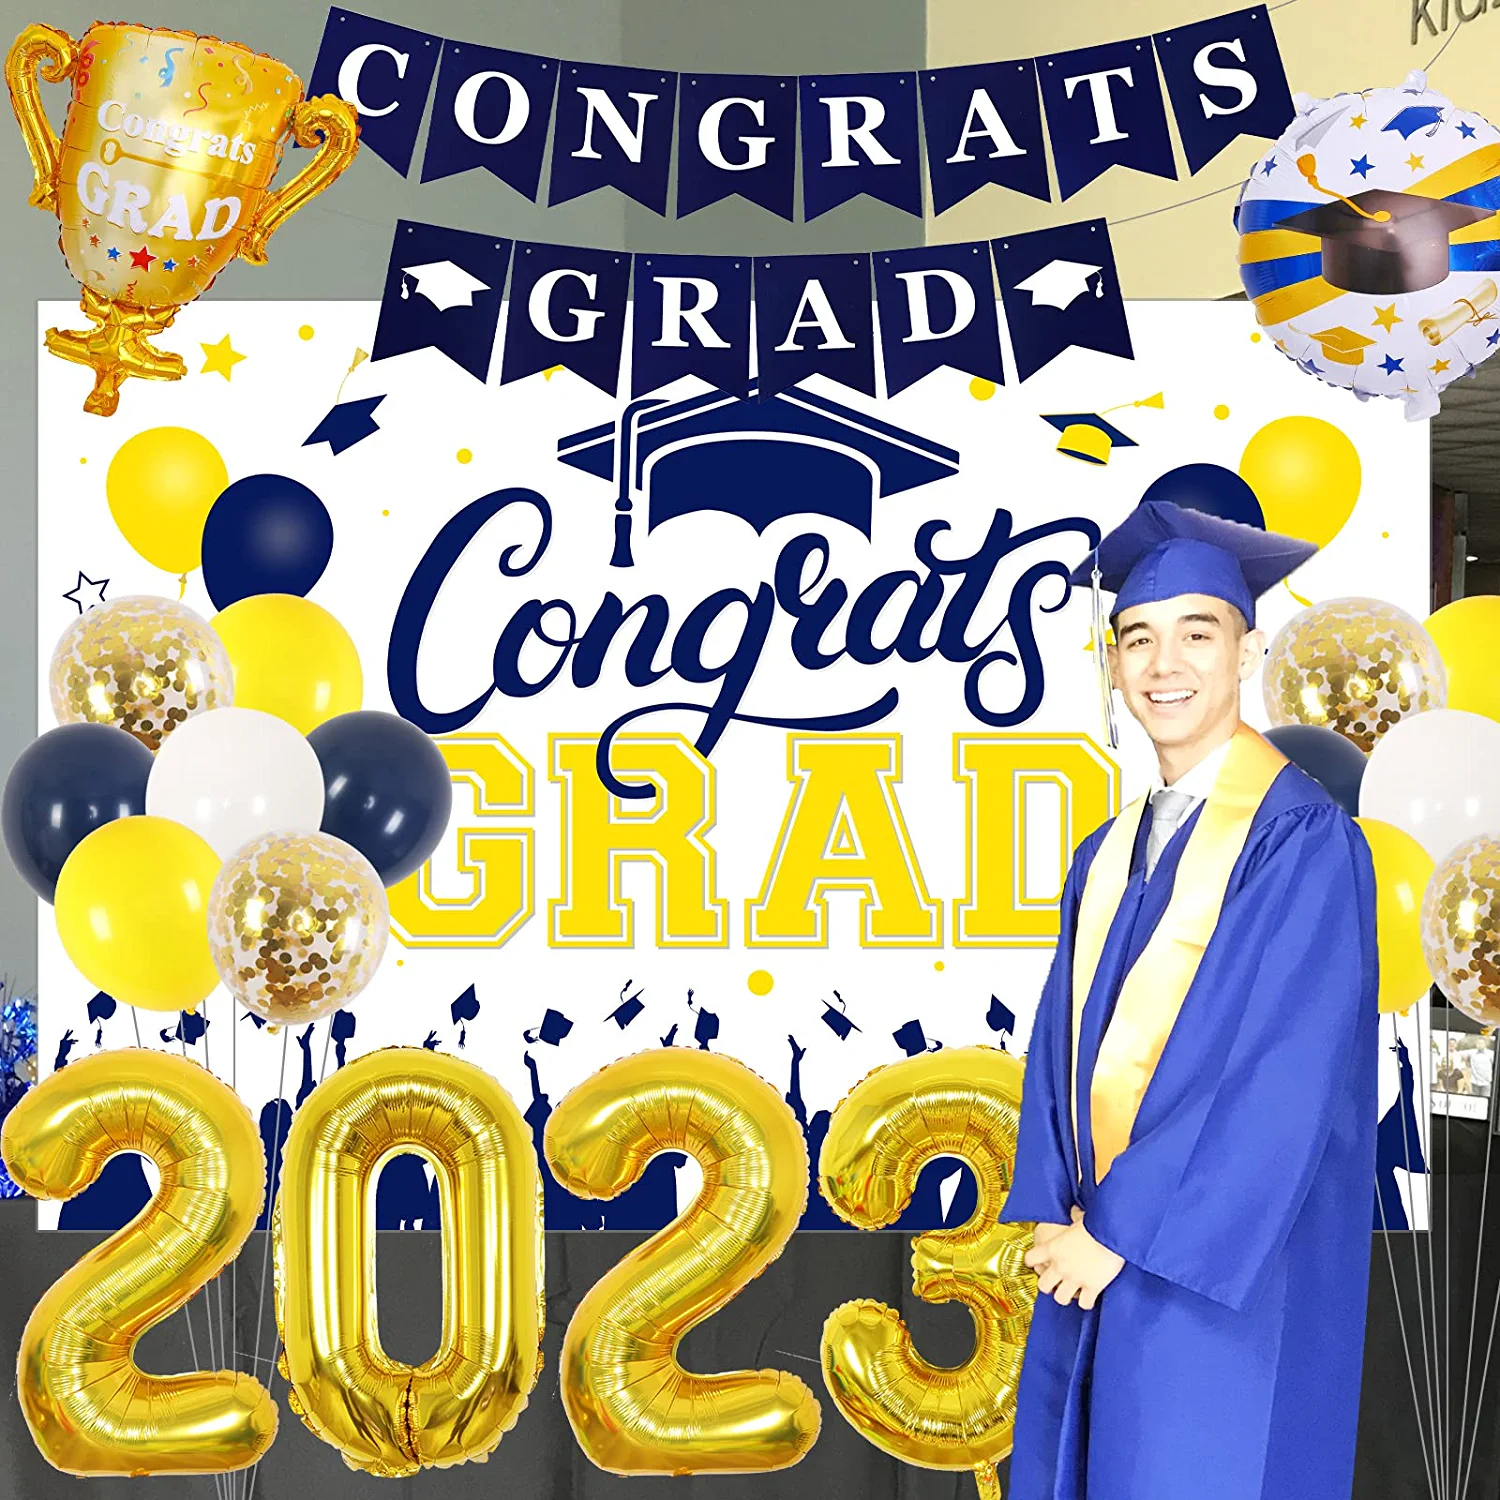 Graduation Decorations Class of 2023 - Lighted Large Congrats Grad Banner  Garland Photo Backdrop+Bal…See more Graduation Decorations Class of 2023 